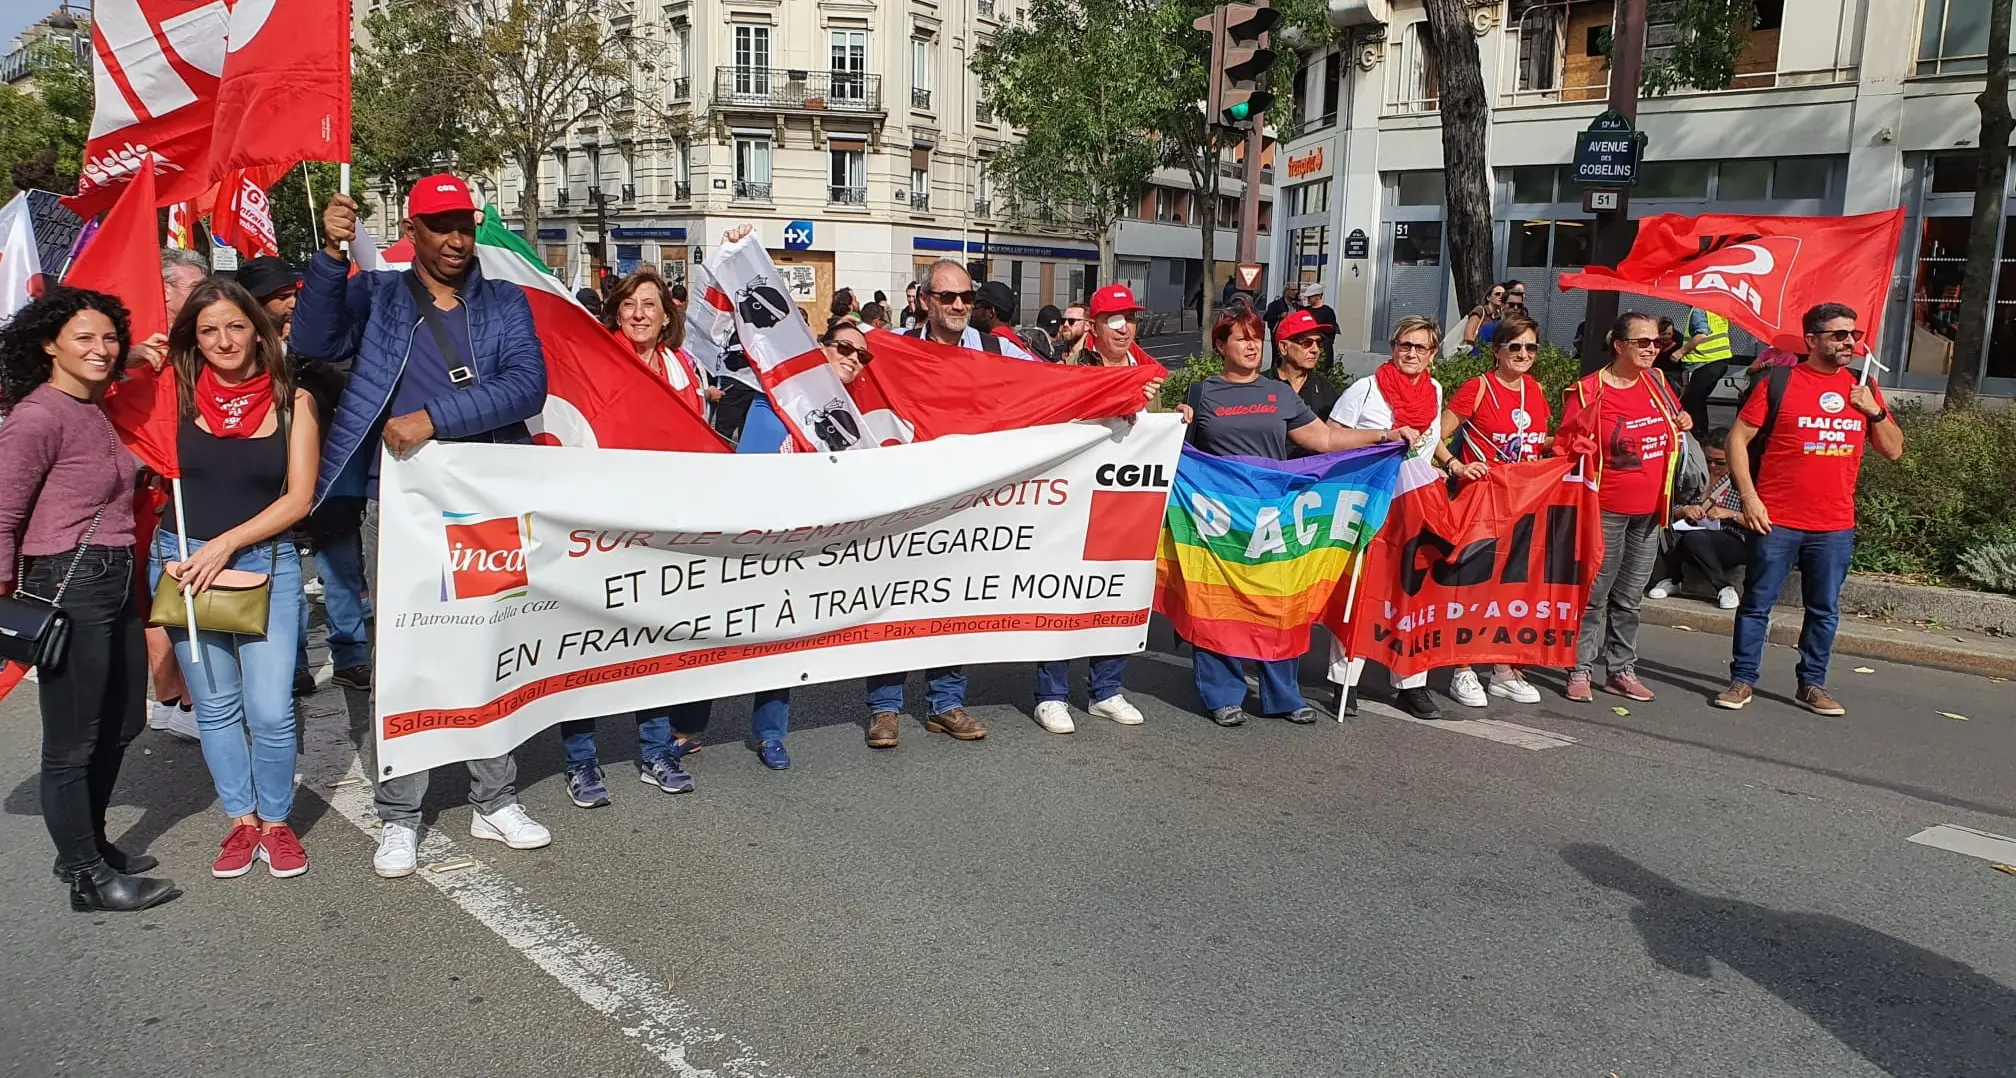 Mobilitazione europea “On the road for a fair deal for workers”, manifestazione a Parigi